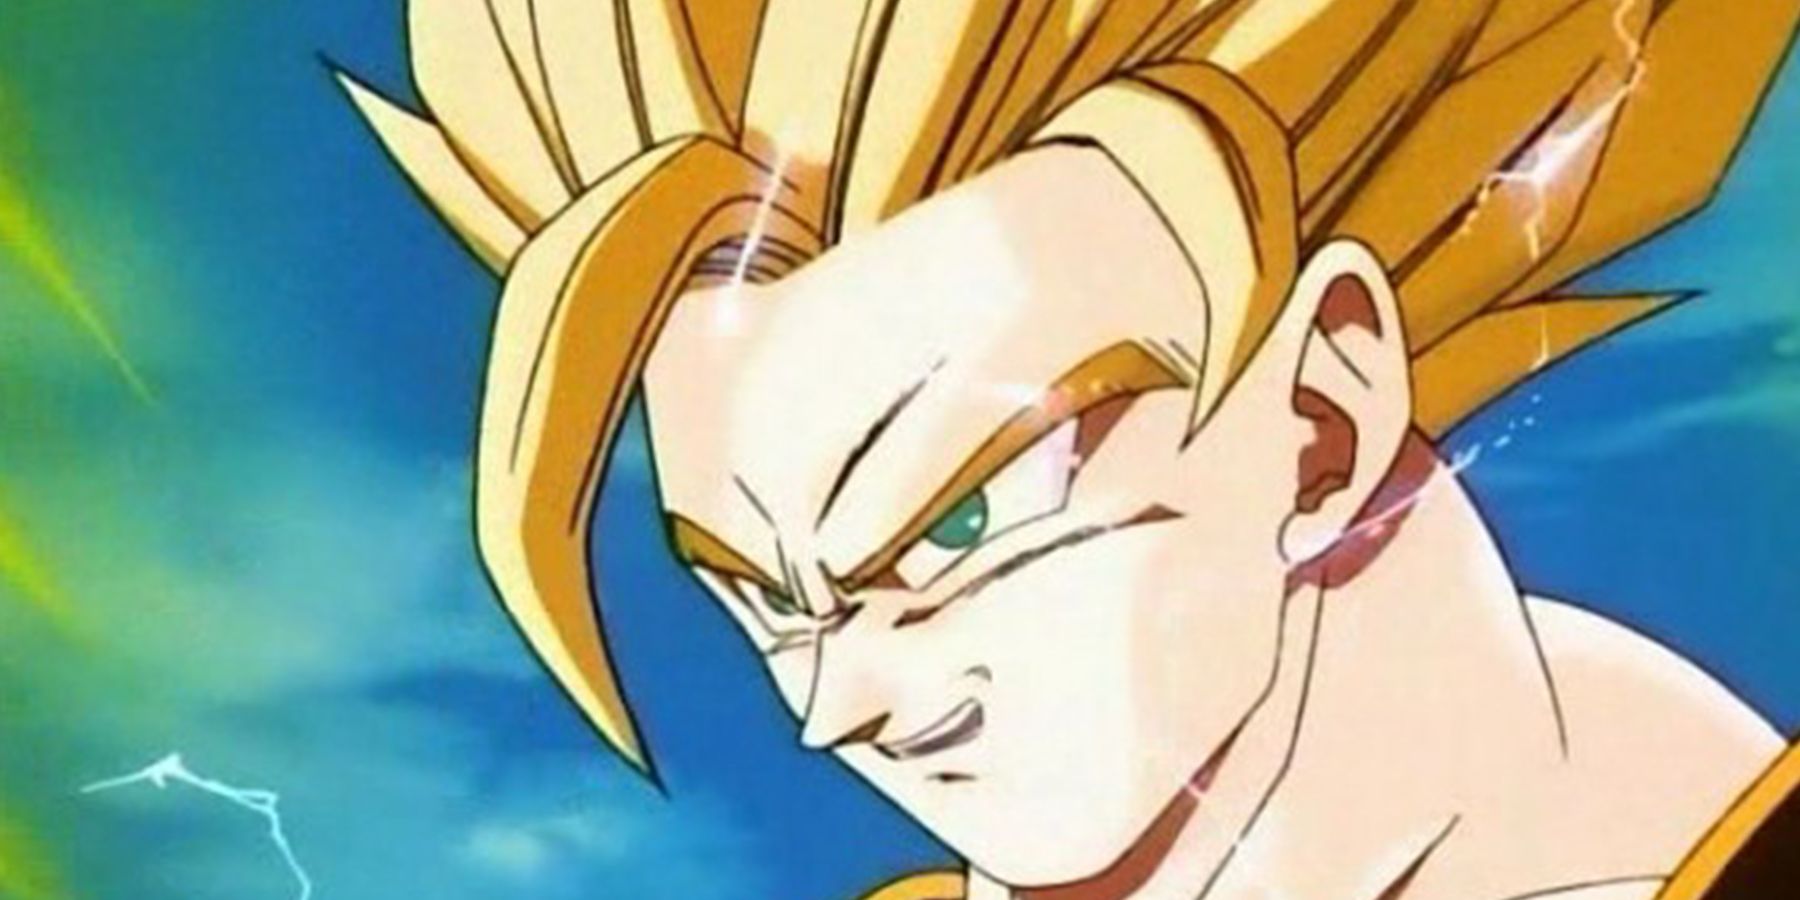 Goku in his Super Saiyan 2 form.